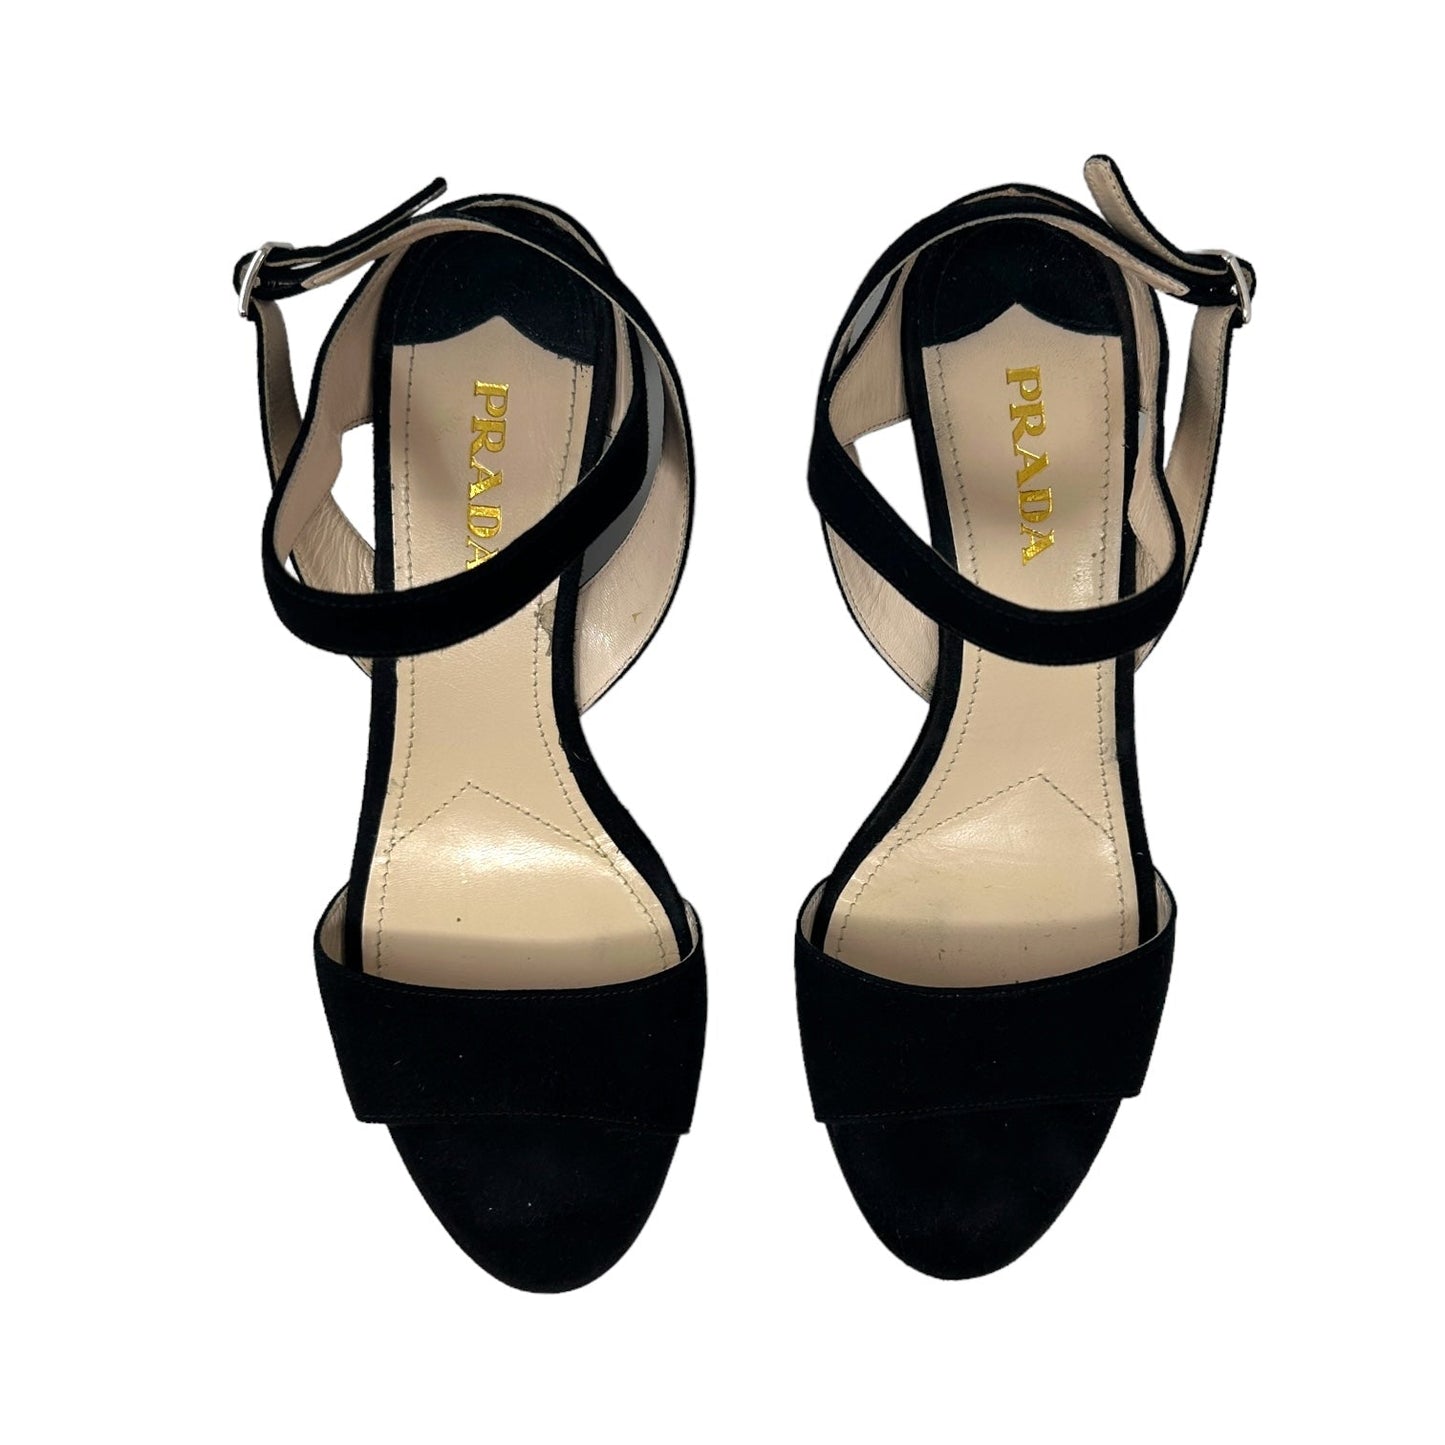 Calzature Donna Suede Wedge Sandal, Nero - Camoscio Luxury Designer By Prada  Size: 9